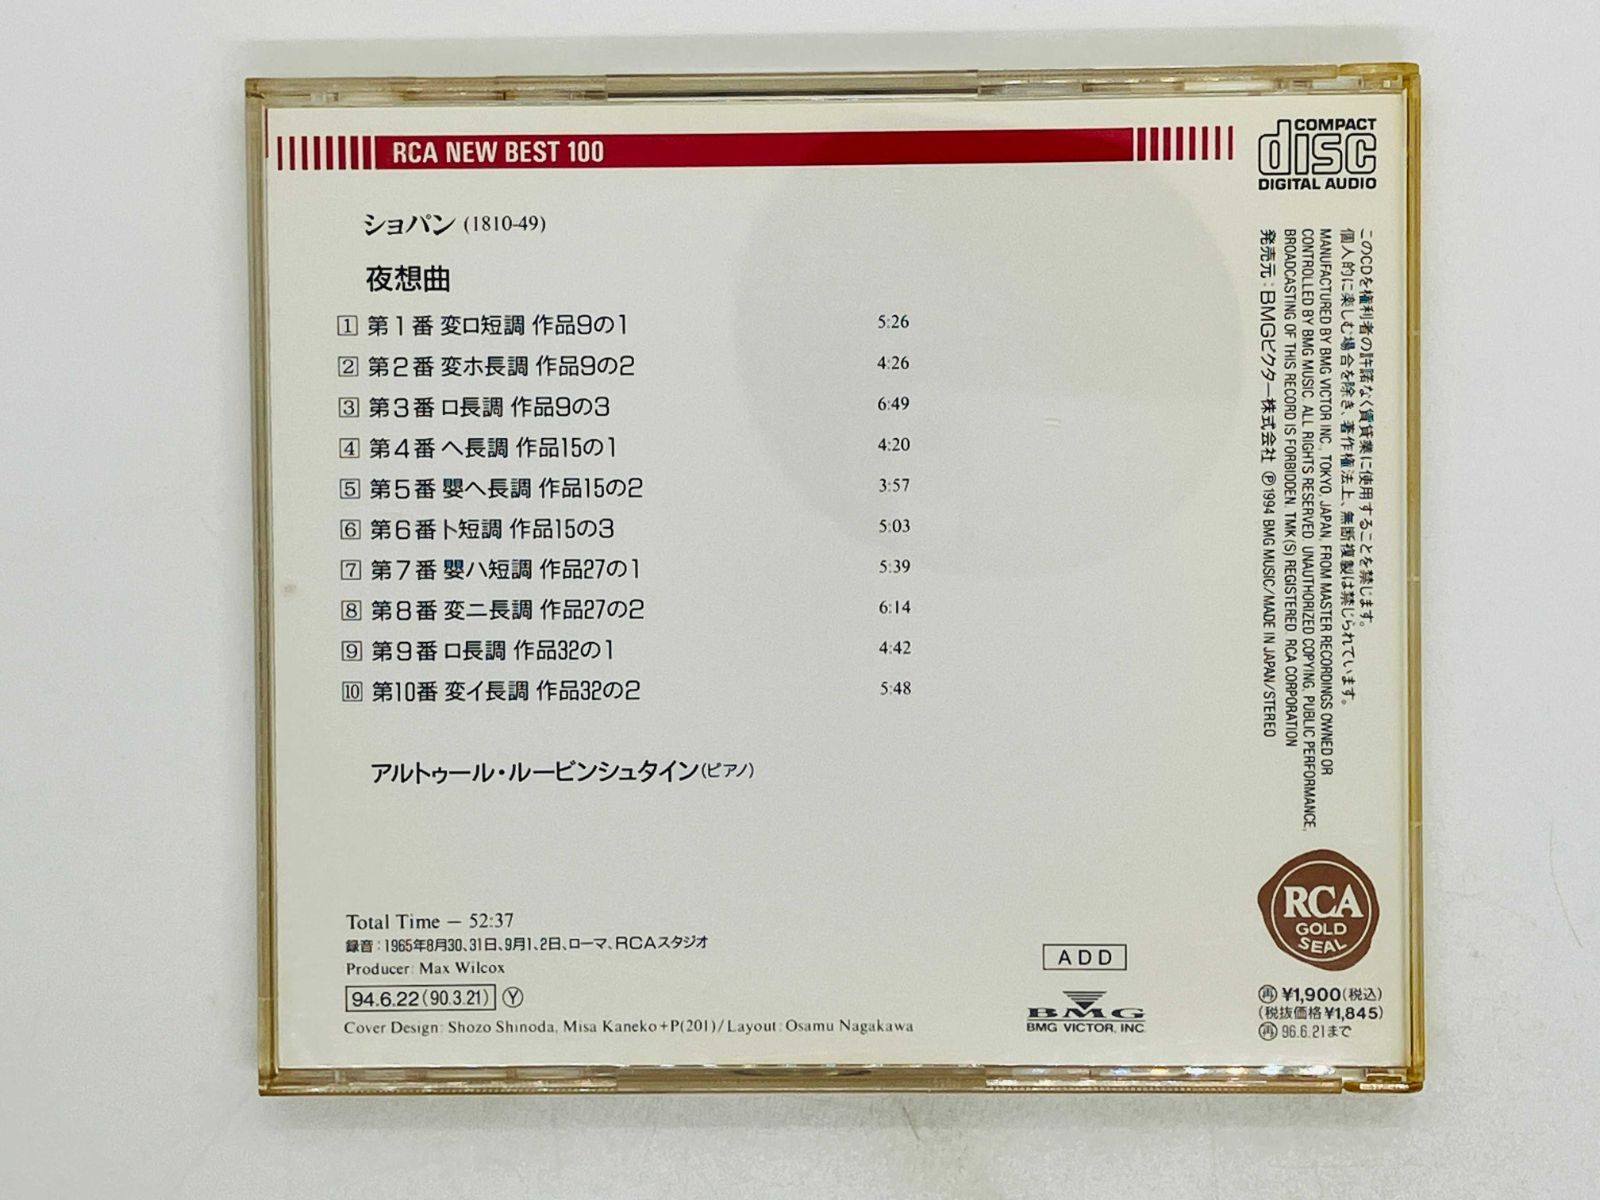 CD ショパン 夜想曲全集 I ルービンシュタイン / CHOPIN THE NOCTURNES VOL.1 RUBINSTEIN BVCC-9333 X44